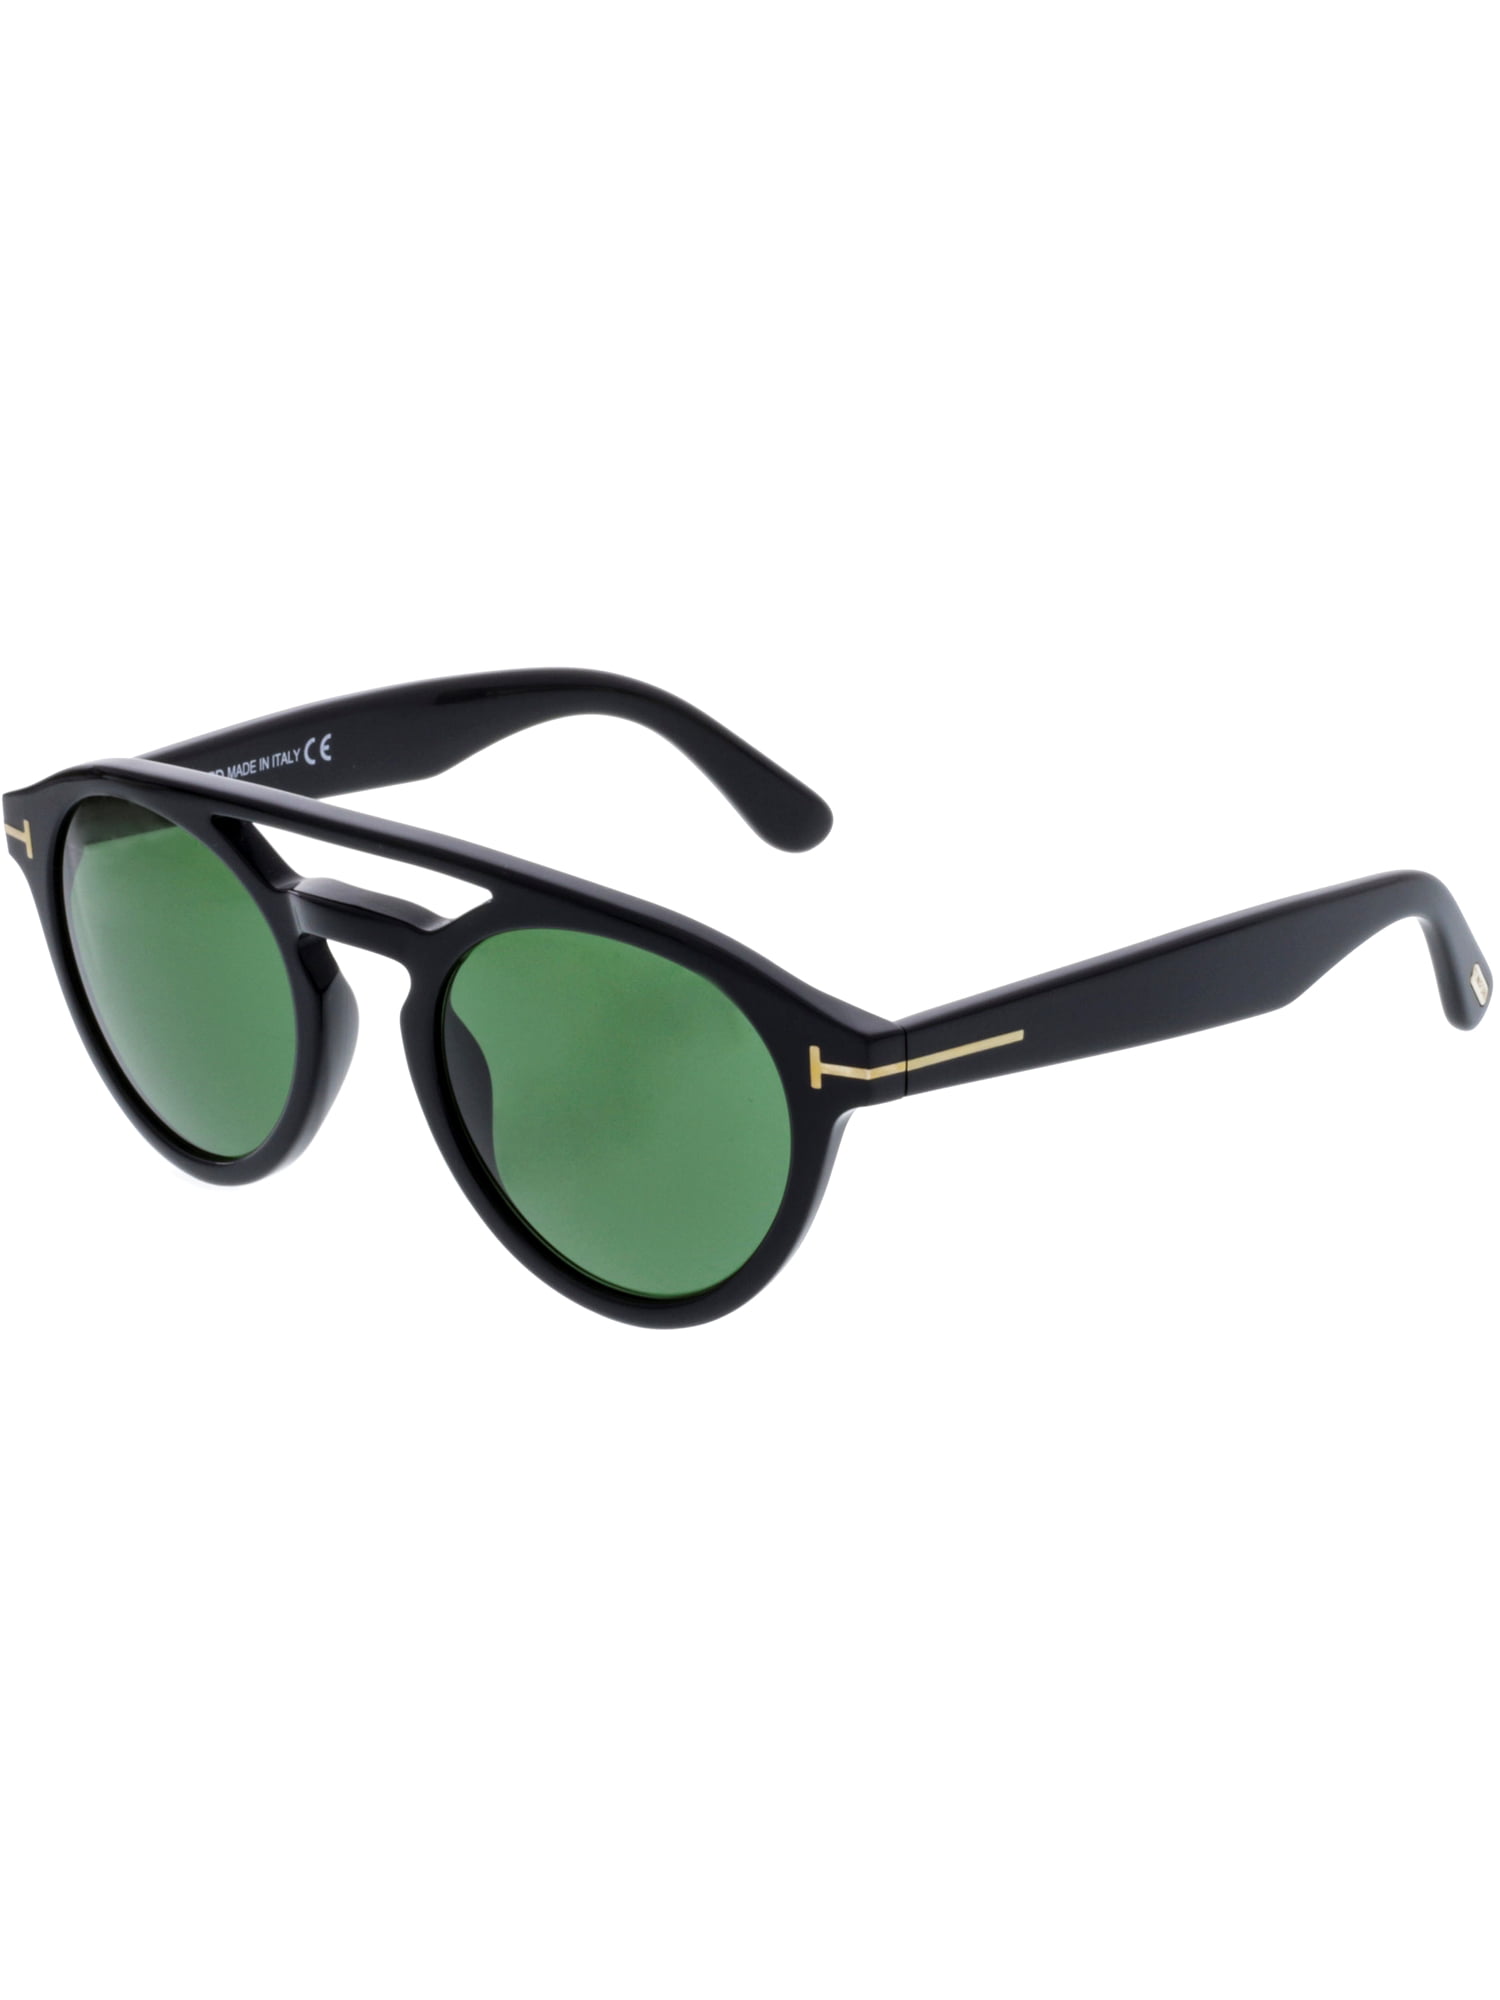 Tom Ford - Tom Ford Men's Clint FT0537-01N-50 Black Oval Sunglasses